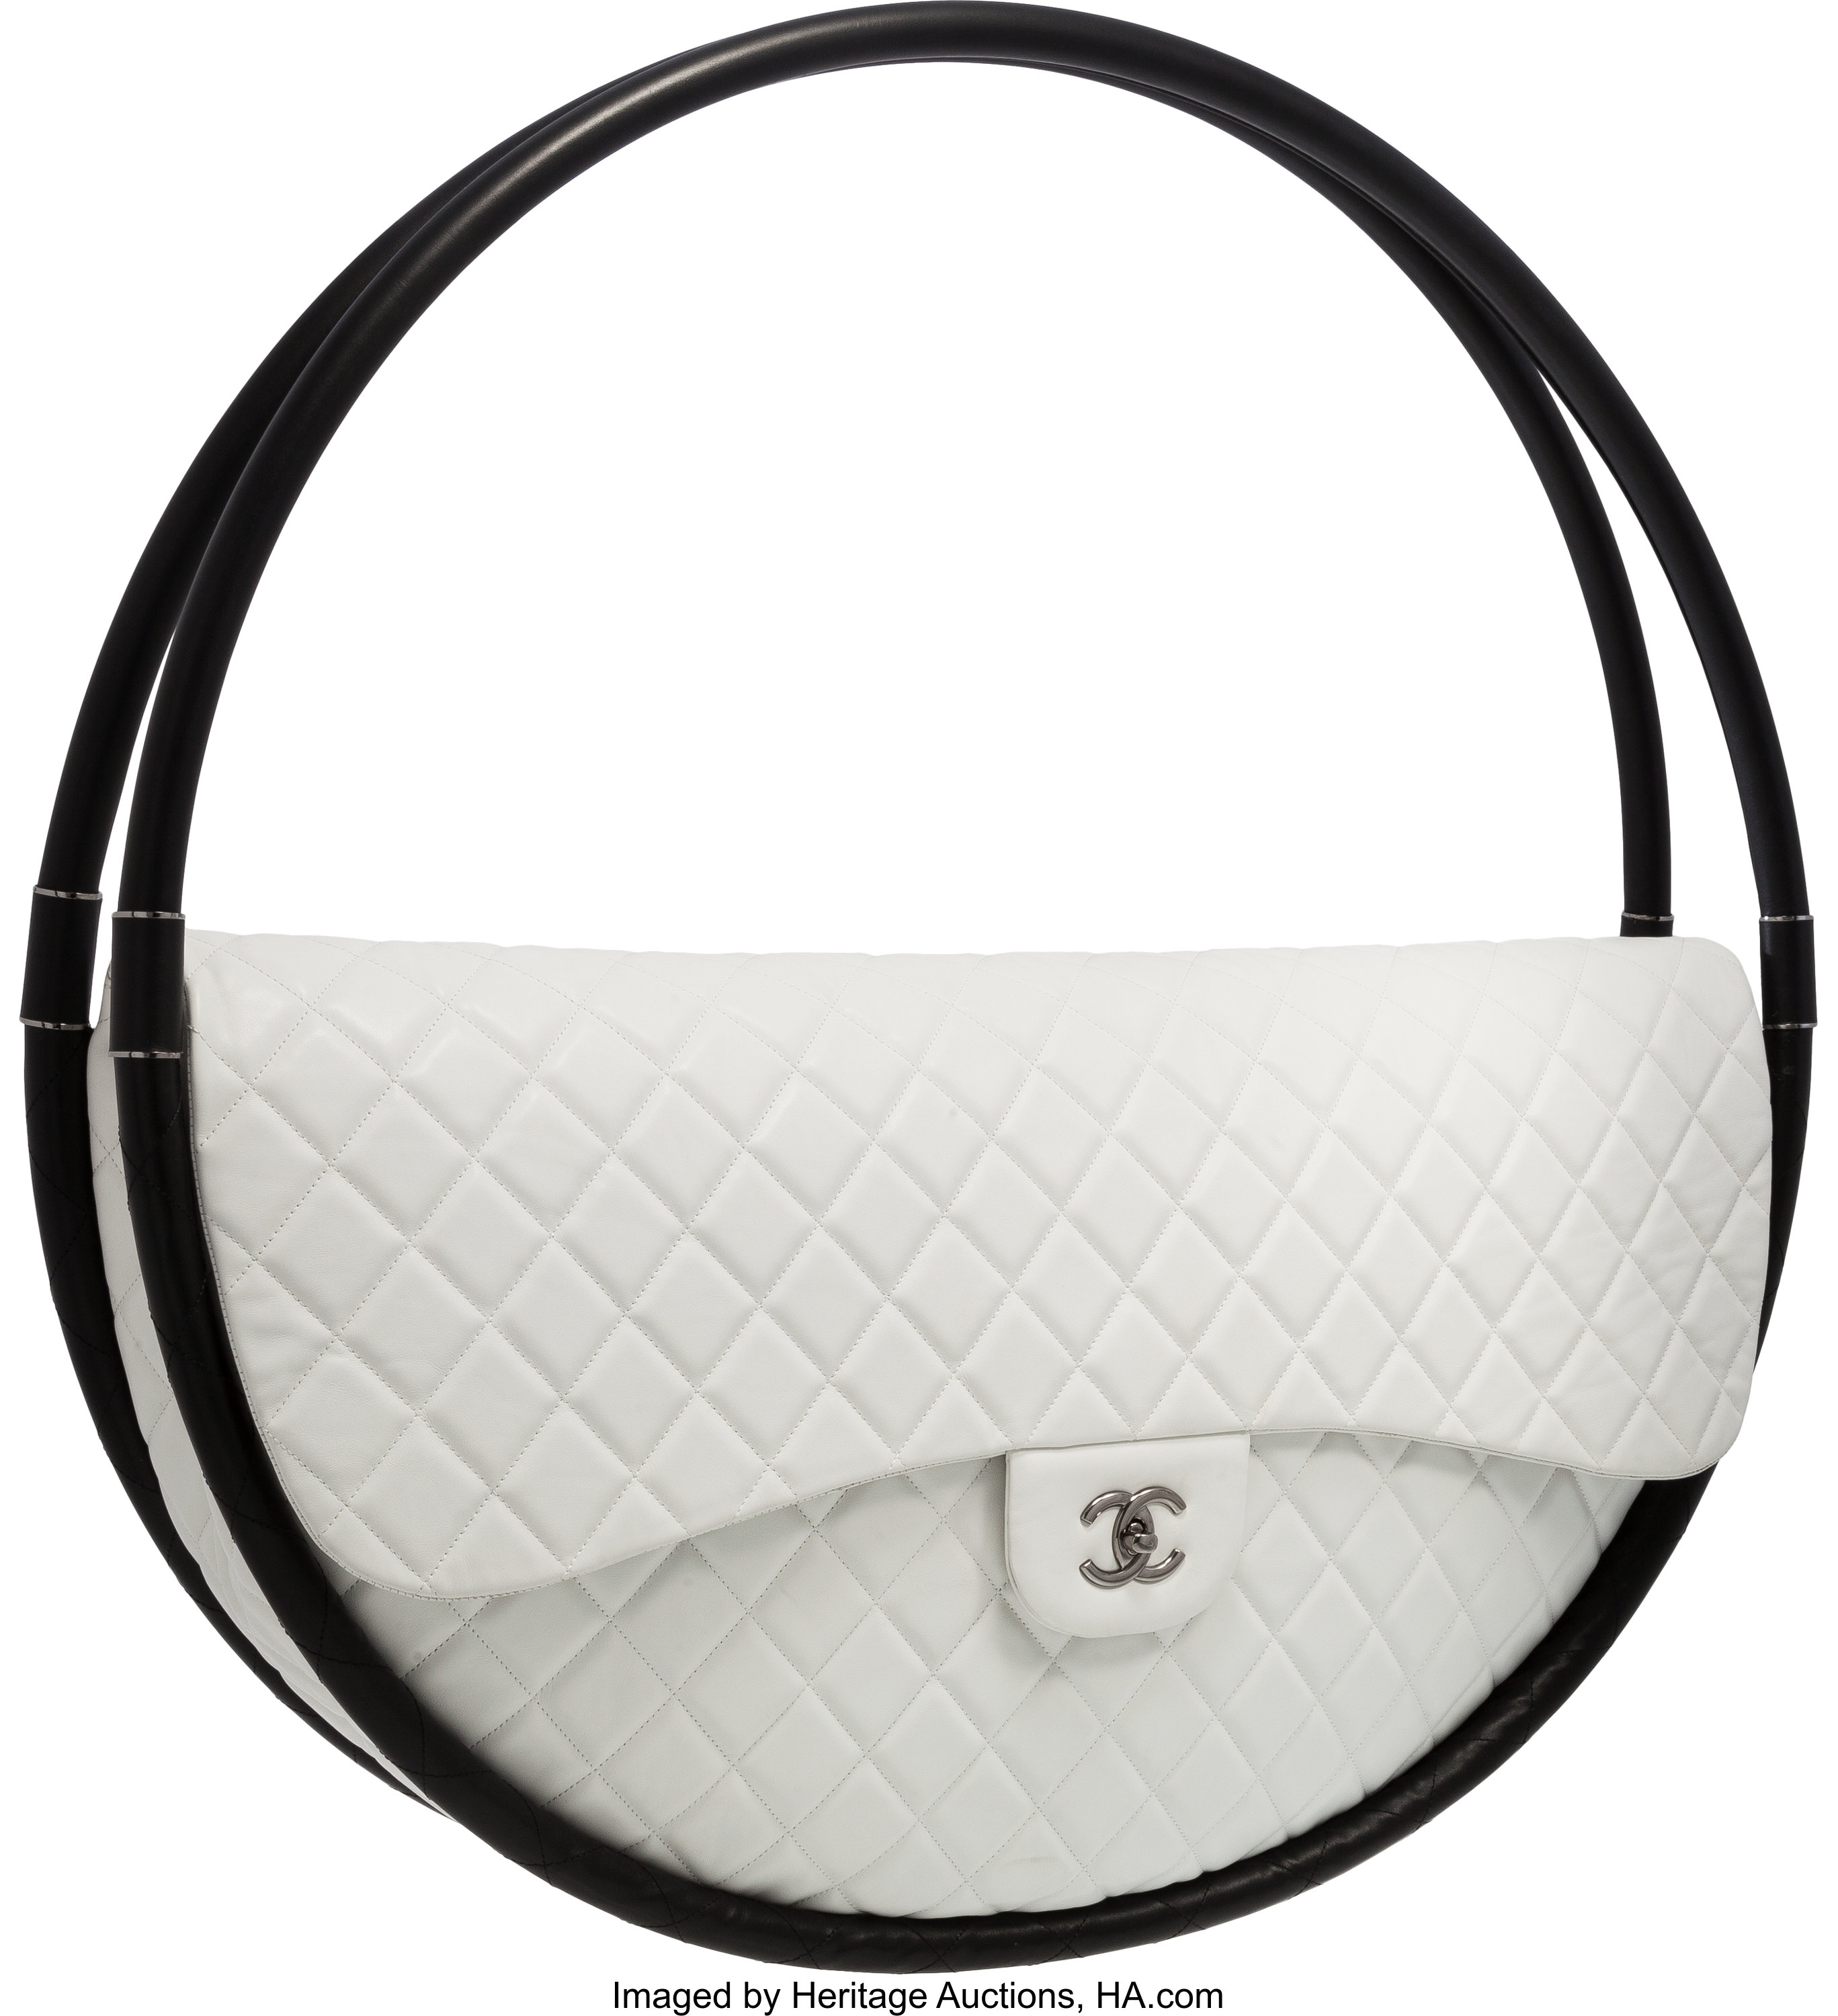 A history of Floyd Mayweather's Chanel hula hoop handbag